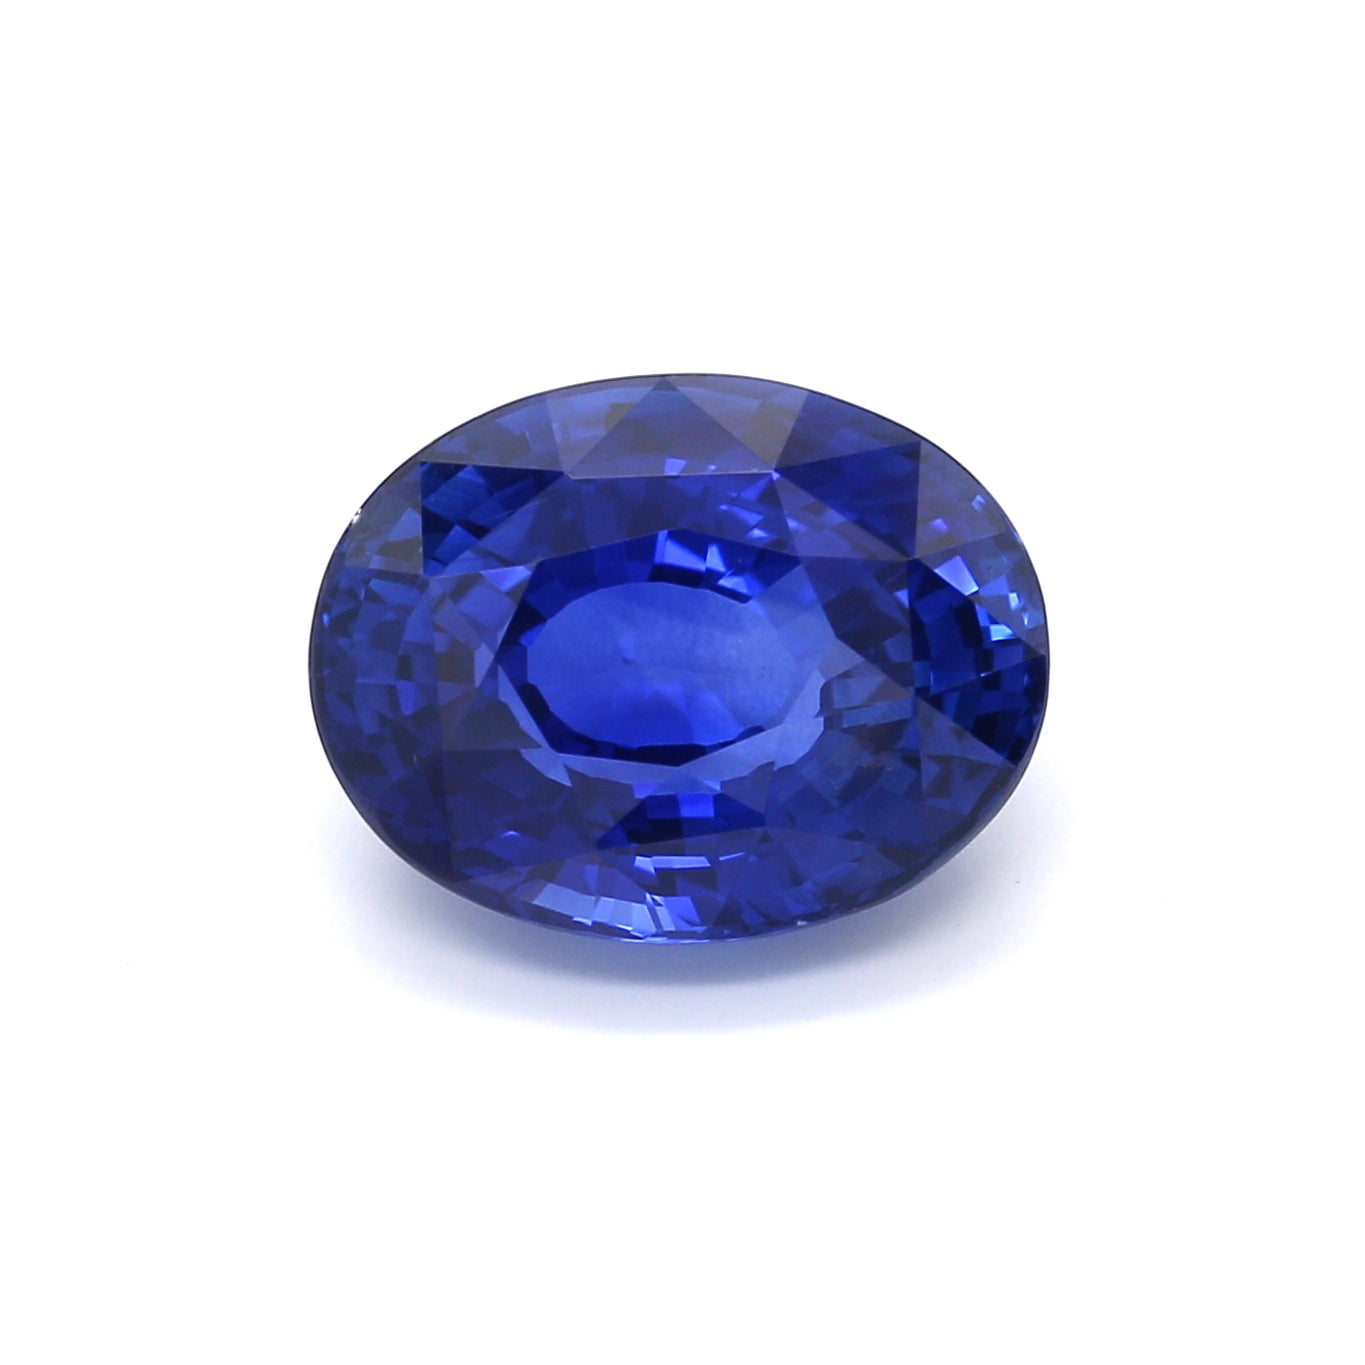 7.11ct Vivid, Royal Blue Oval Sapphire, Heated, Sri Lanka - 12.88 x 9.92 x 6.52mm